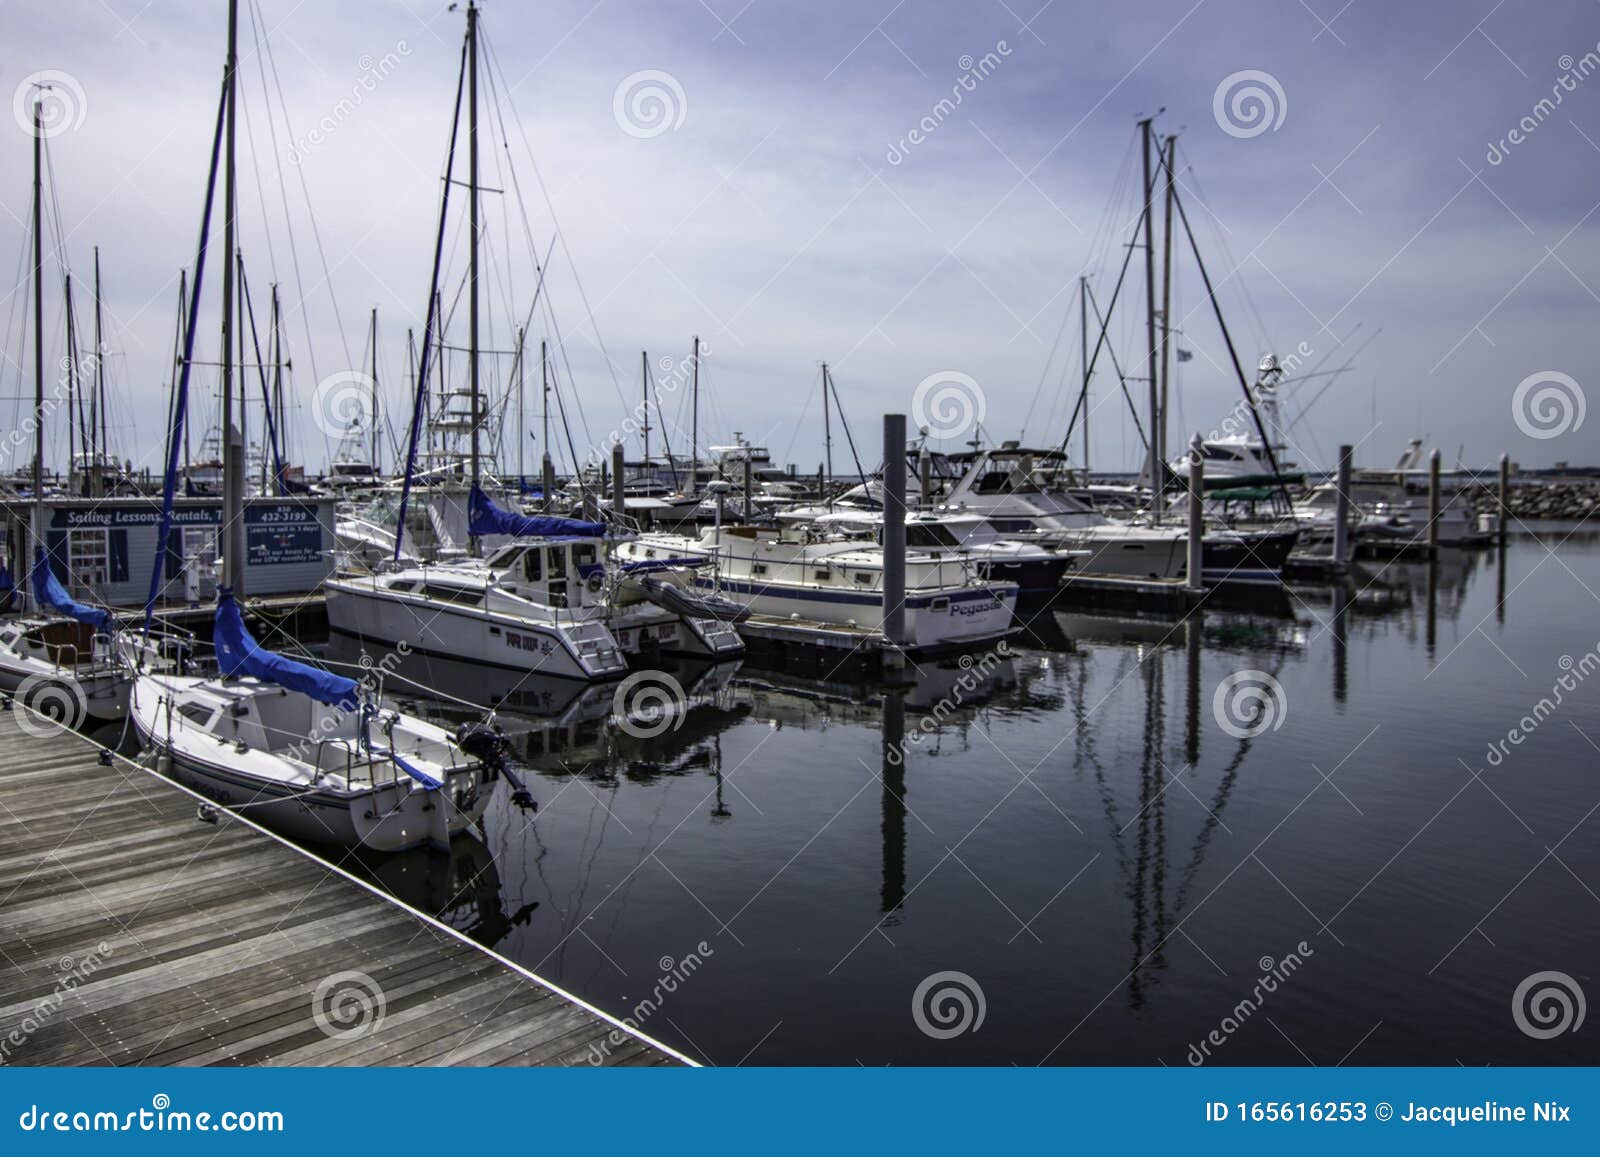 Boats Docked at Palafox Pier Editorial Stock Photo - Image of marine ...